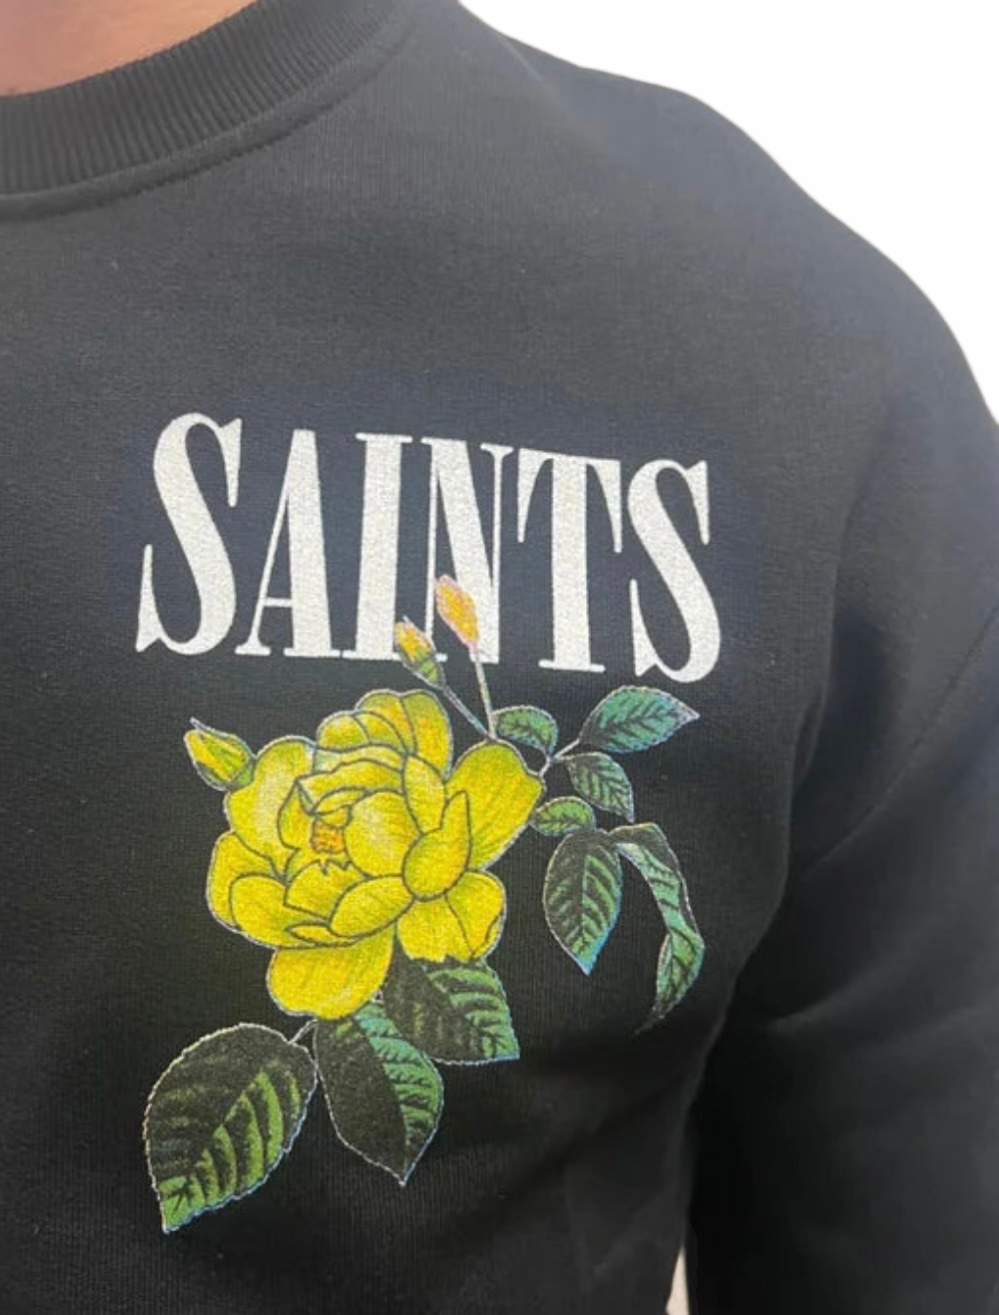 Saints Sweater - Zwart